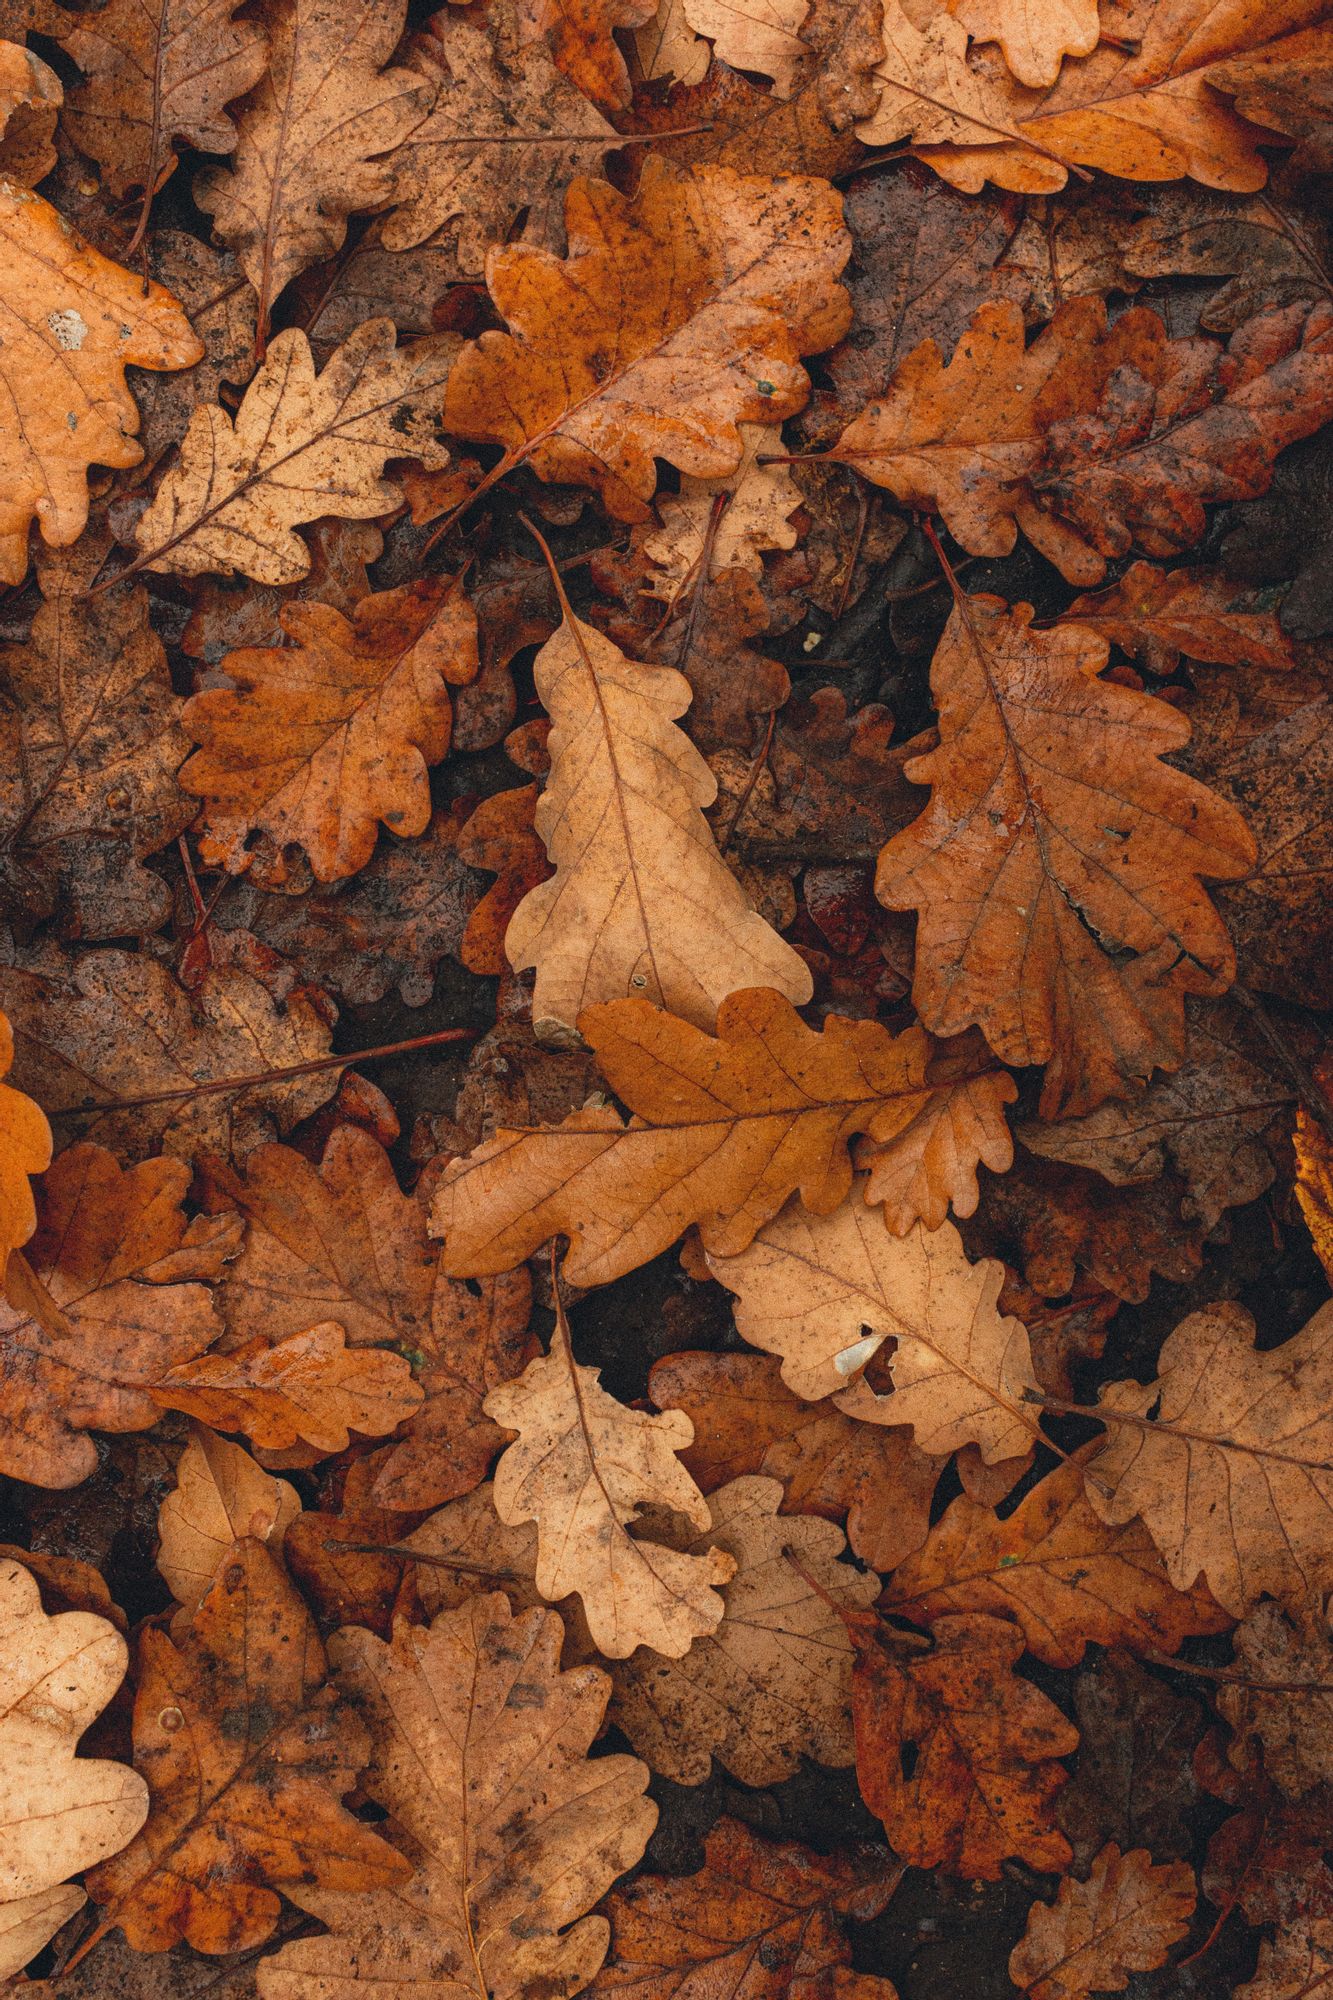 Download mobile wallpaper: Dry, Fallen, Leaves, Brown, Macro, Autumn ...